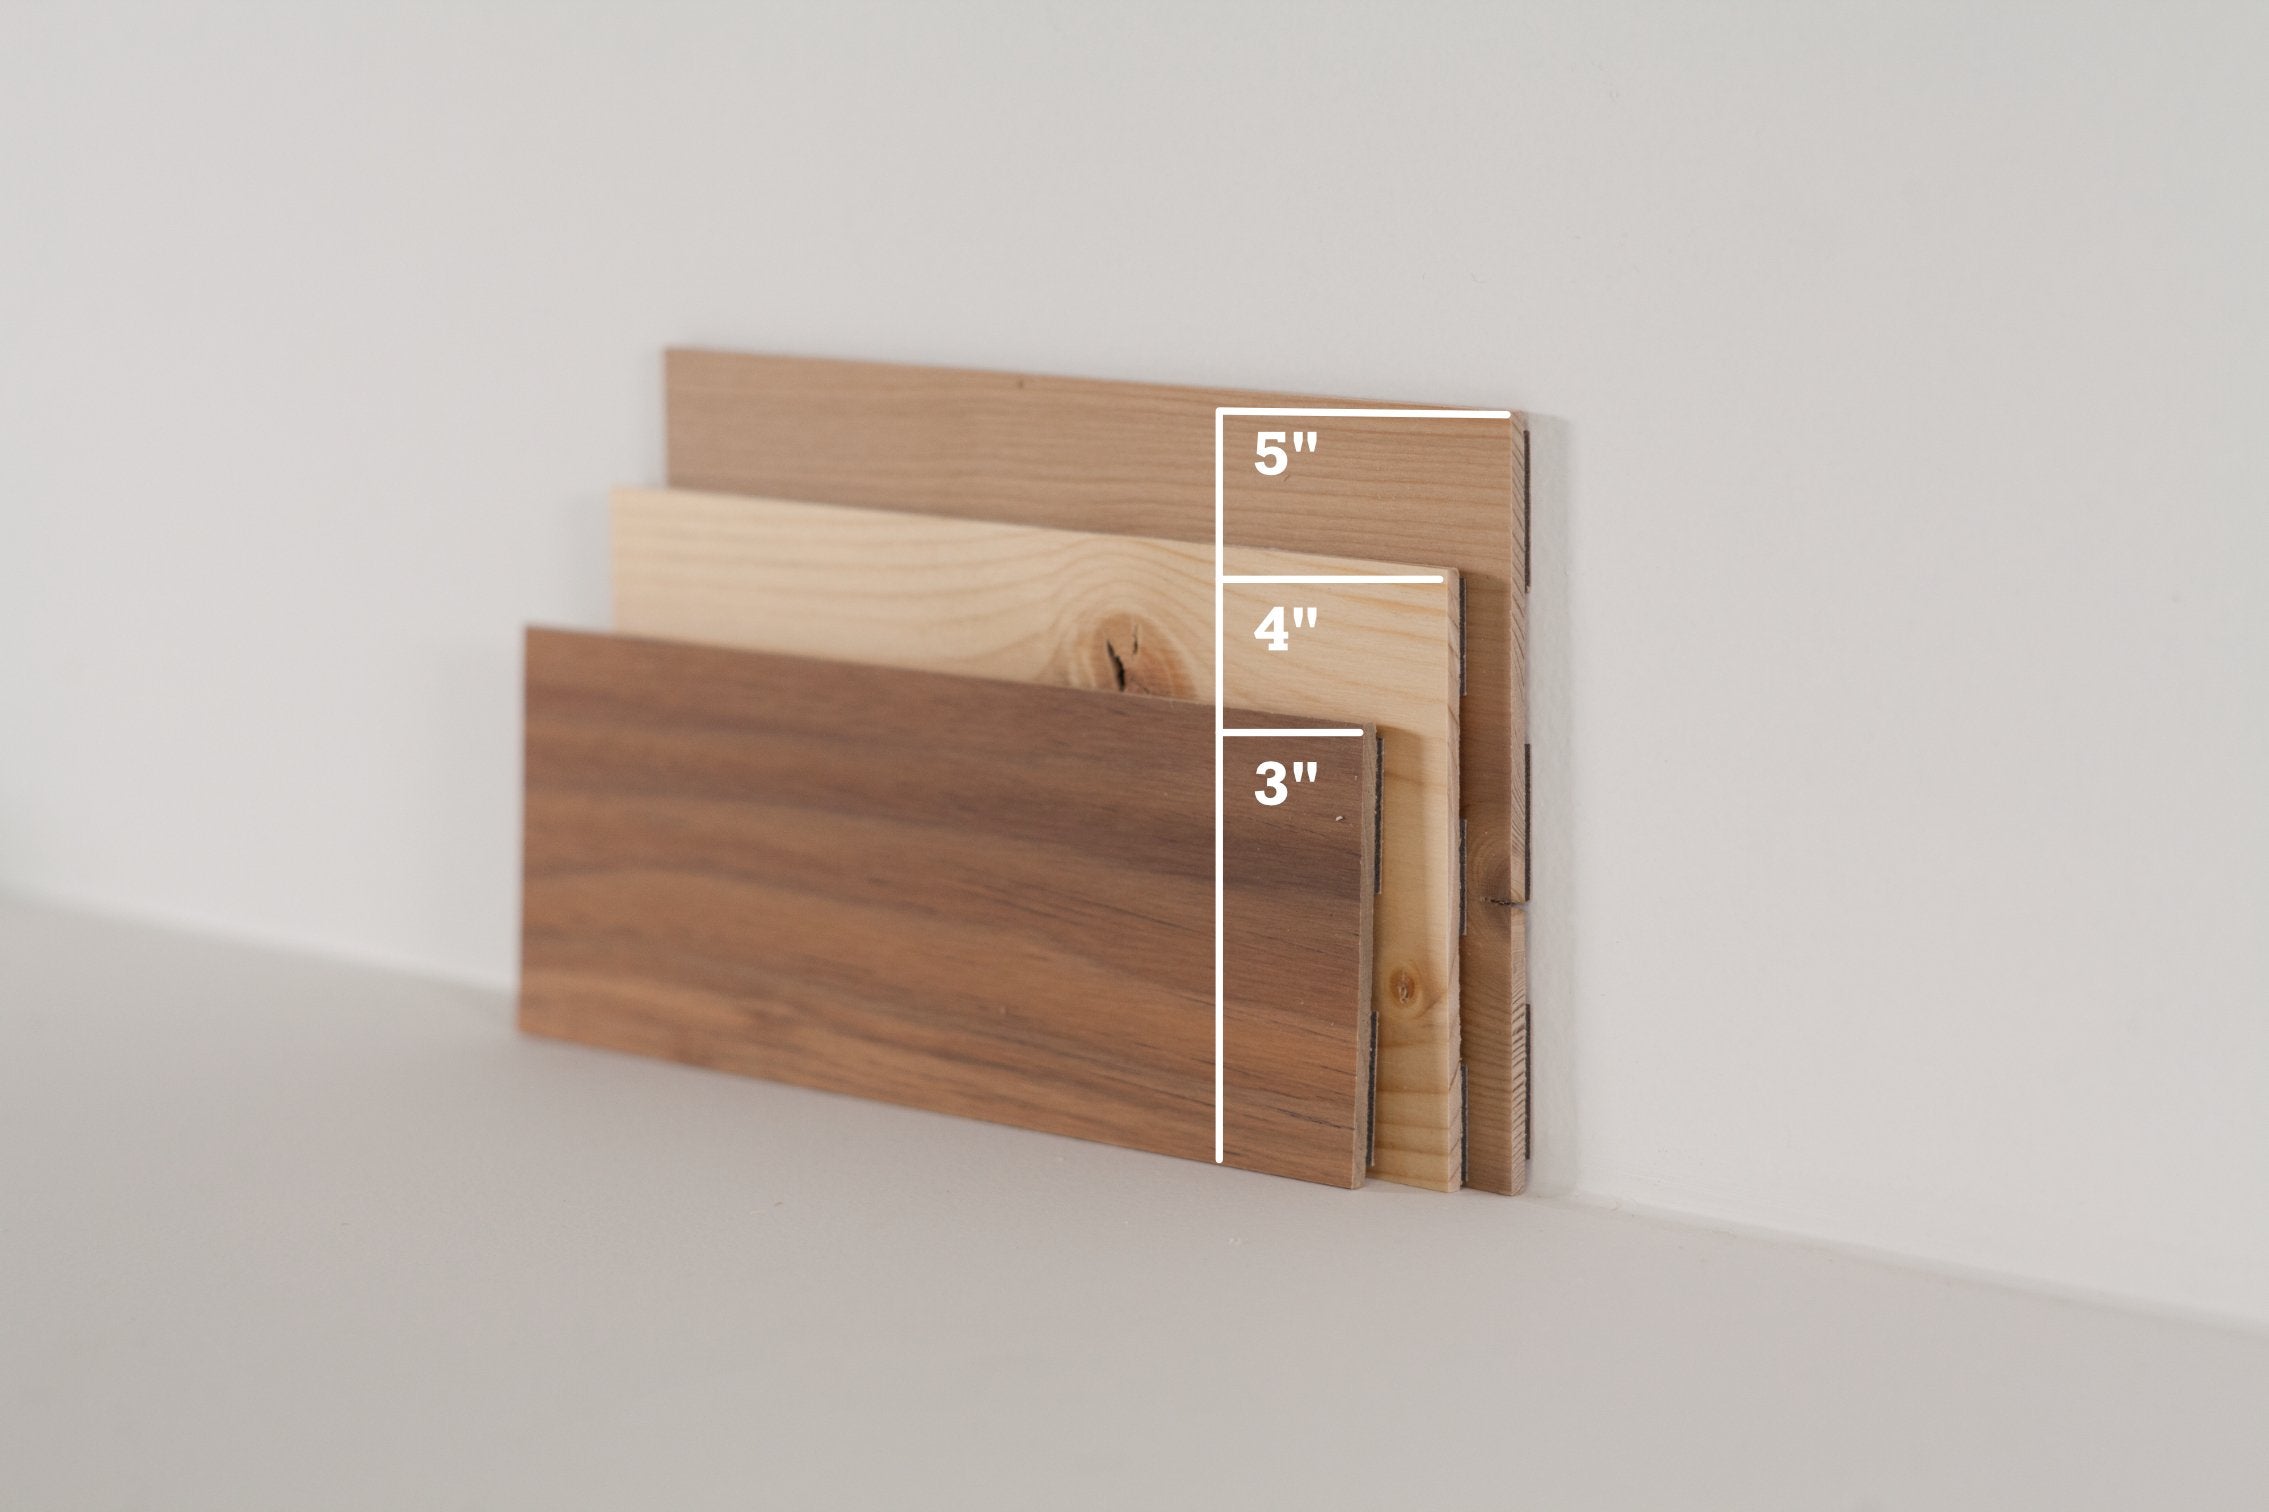 Vertical Caramelized Bamboo Peel & Stick Wood Plank Sample